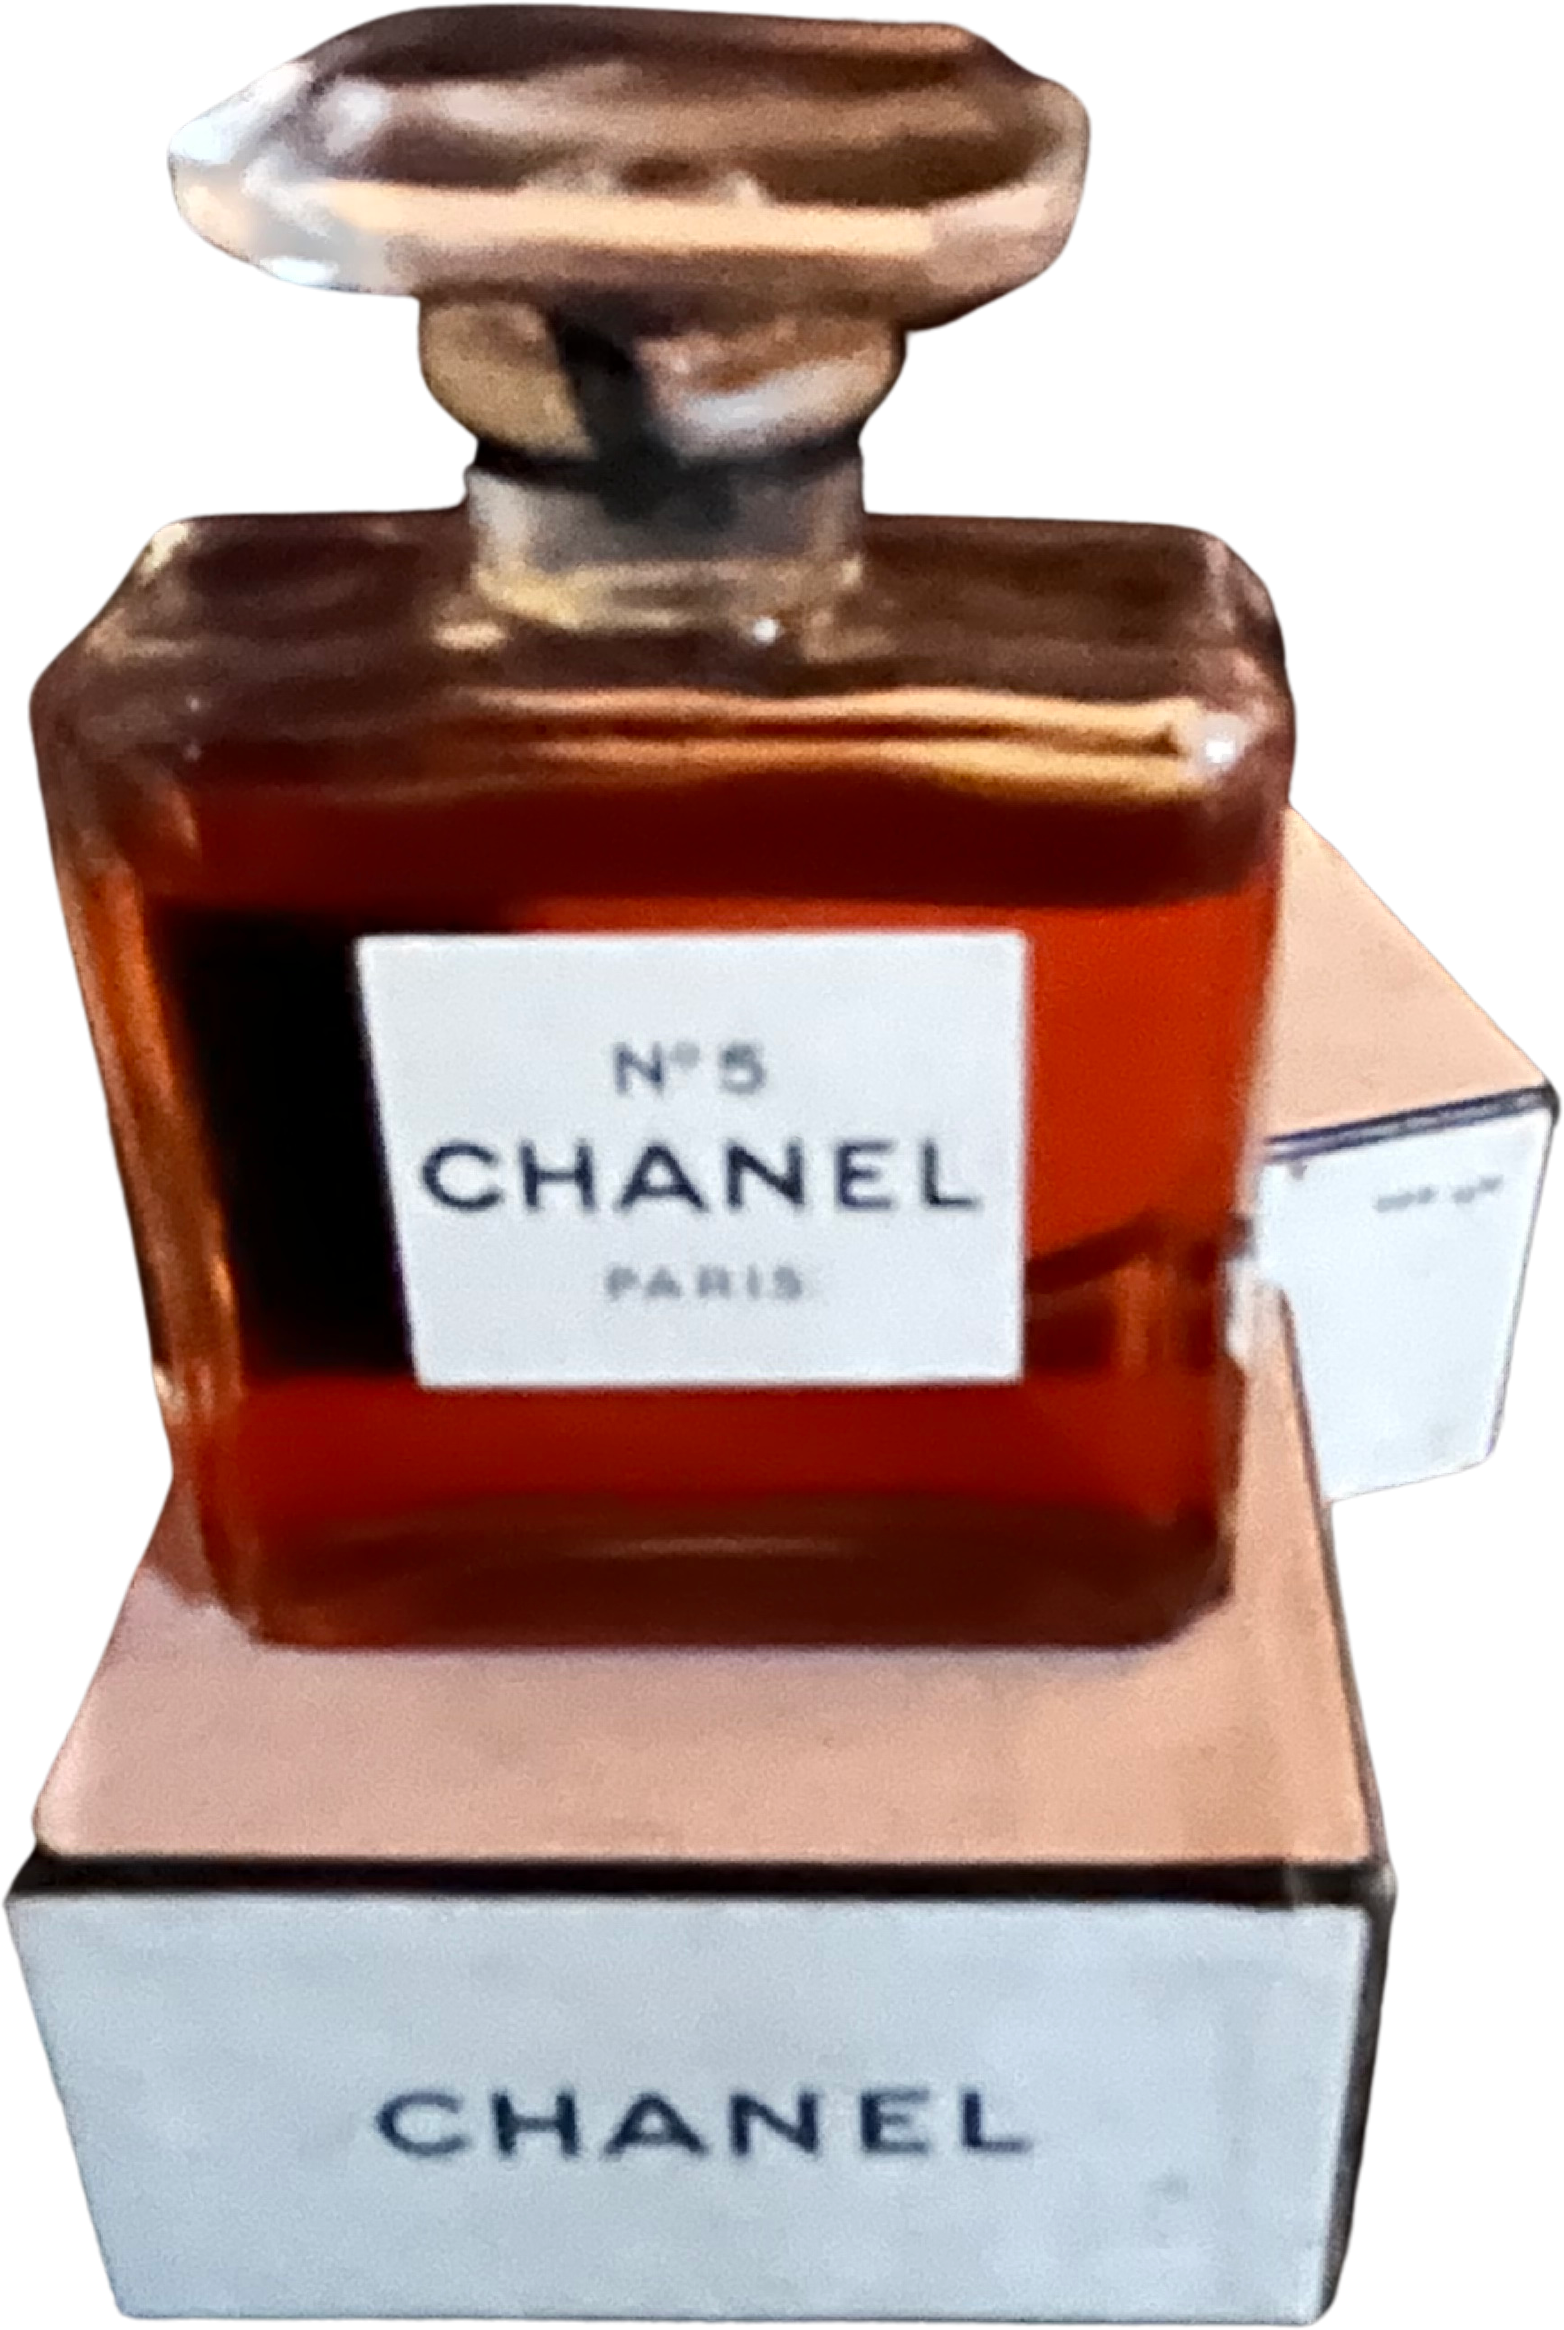 VINTAGE MINIATURE CHANEL #5 perfume bottle ALL GLASS DAUBER excellent  condition $11.50 - PicClick